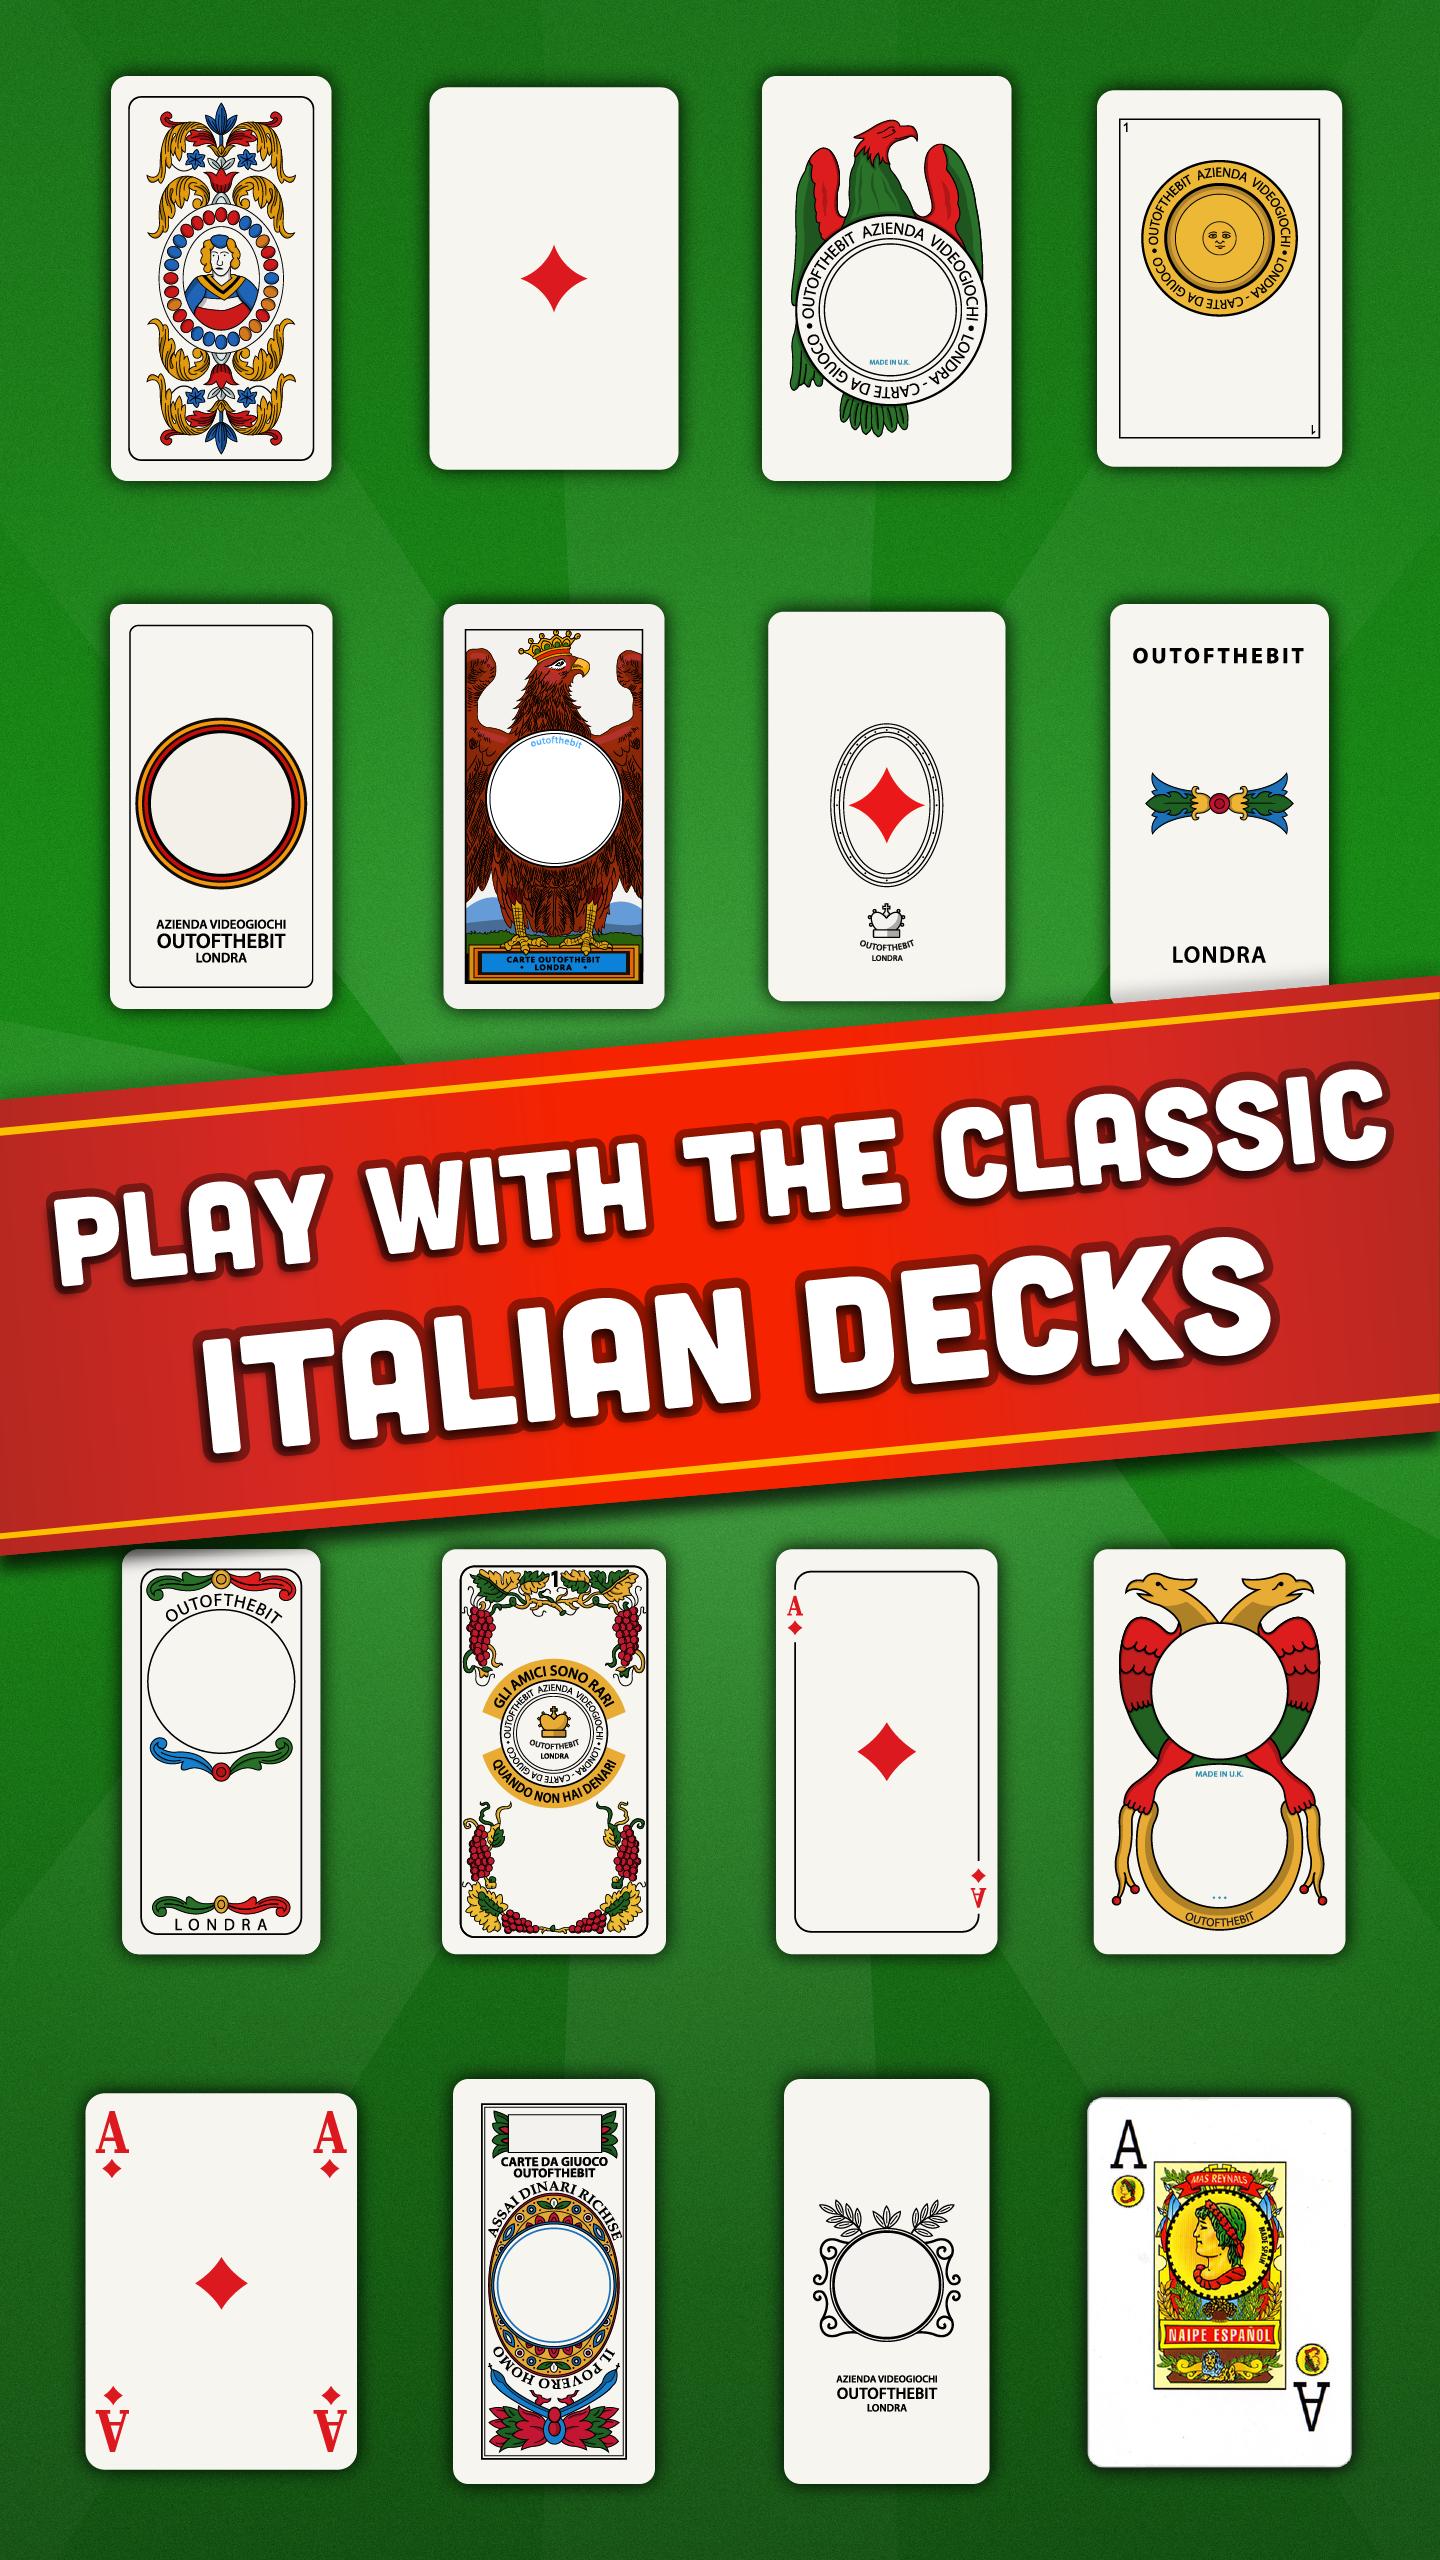 Tressette - Classic Card Games